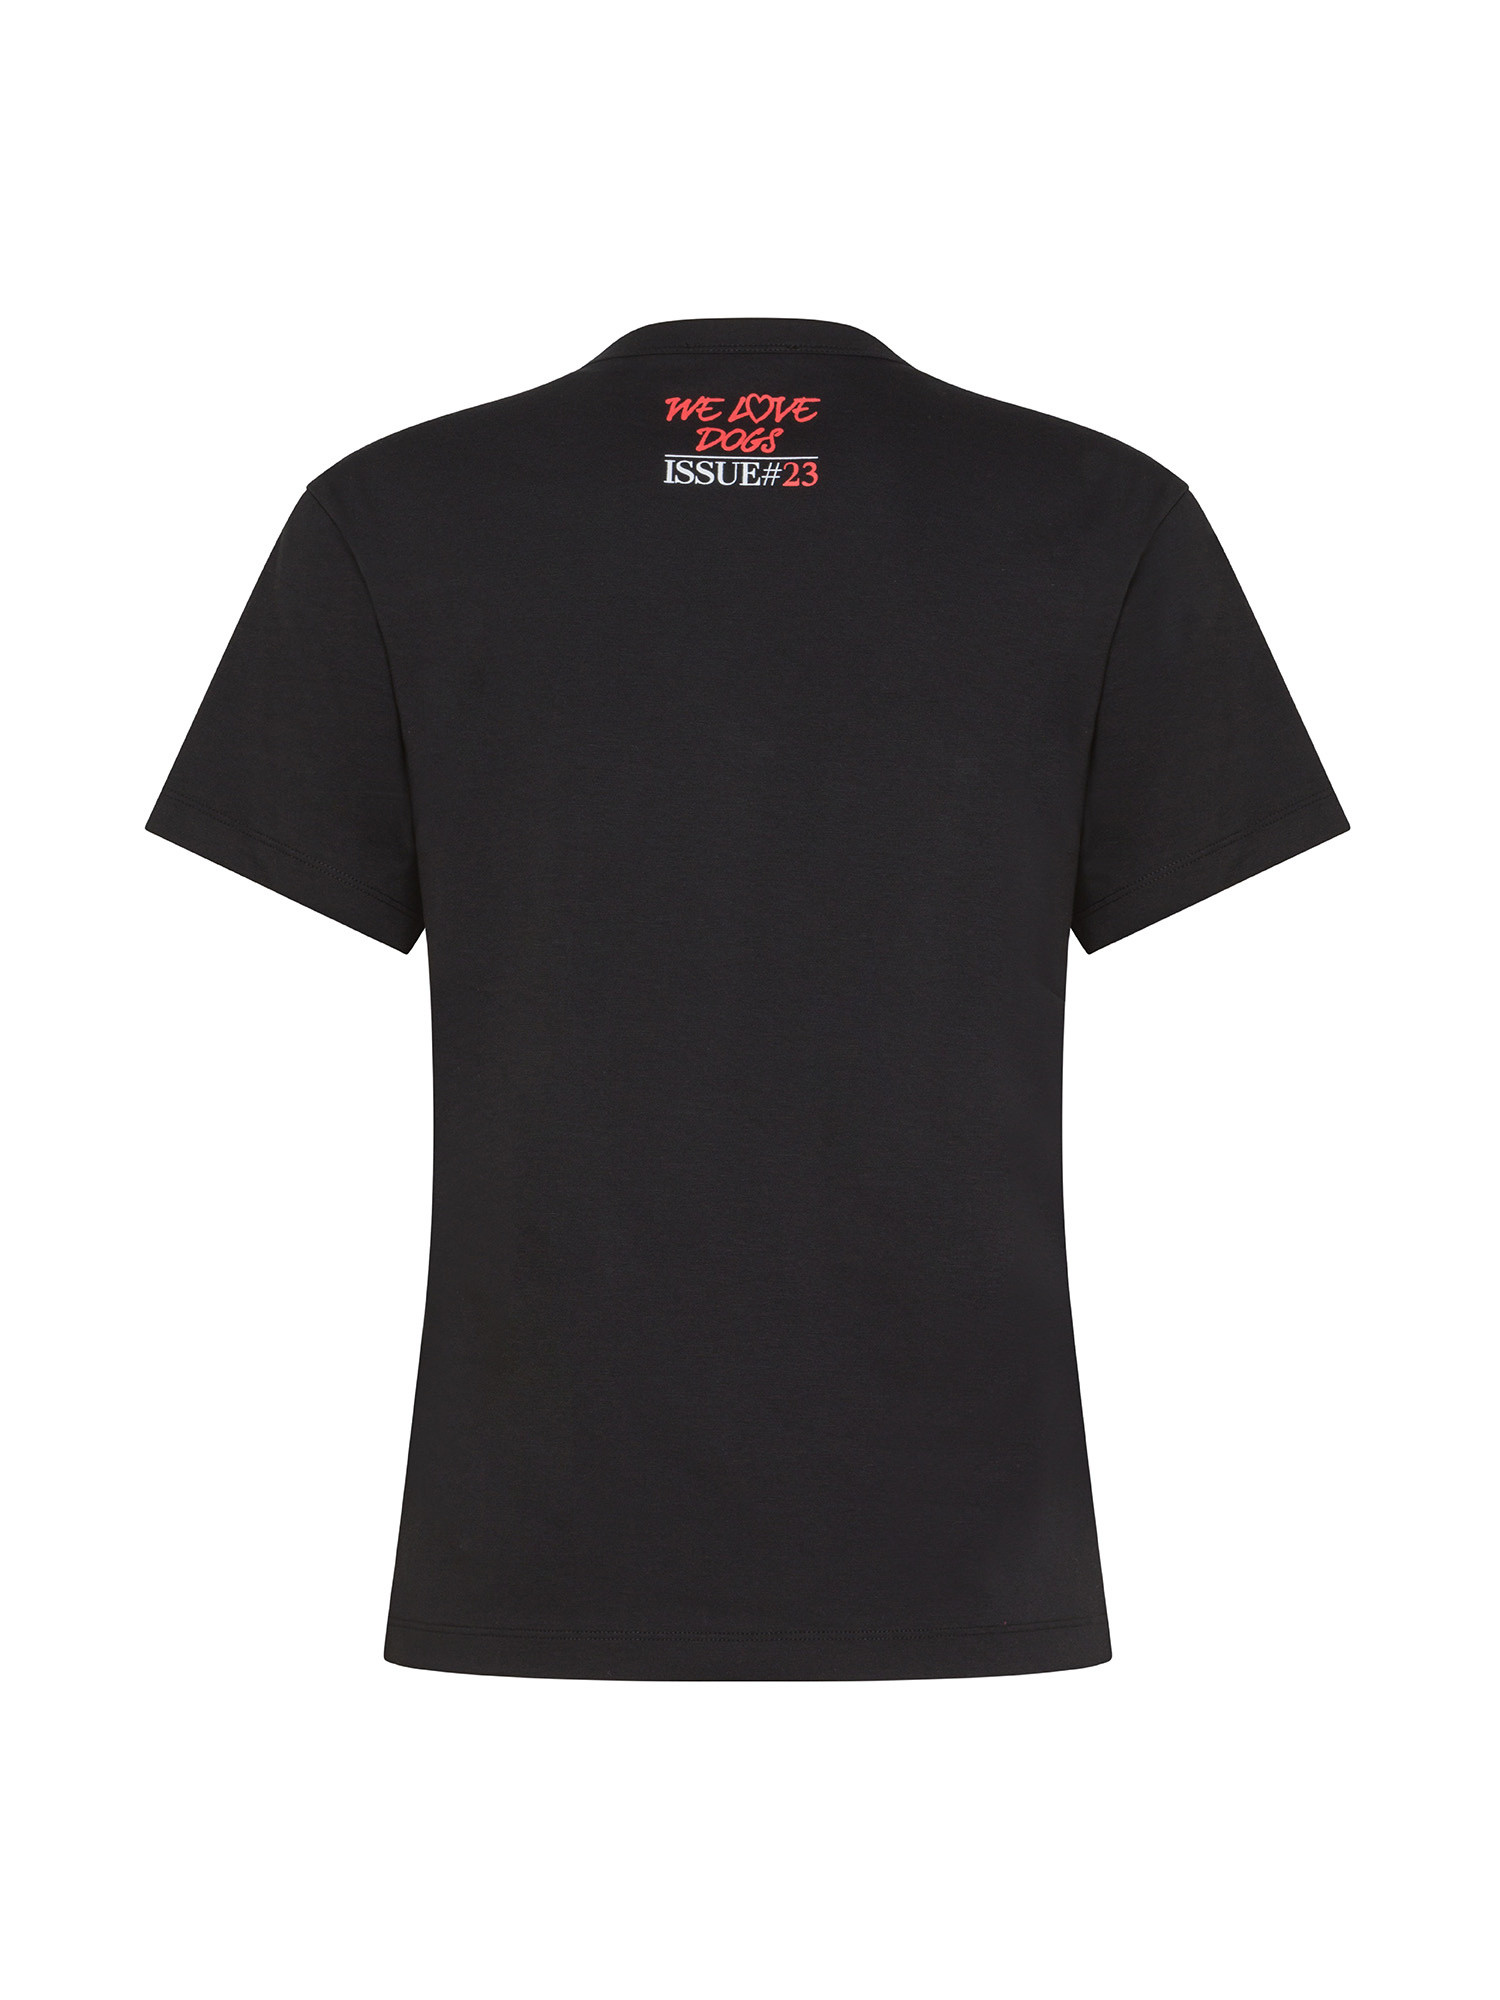 Emporio Armani - Cotton T-shirt with logo, Black, large image number 1